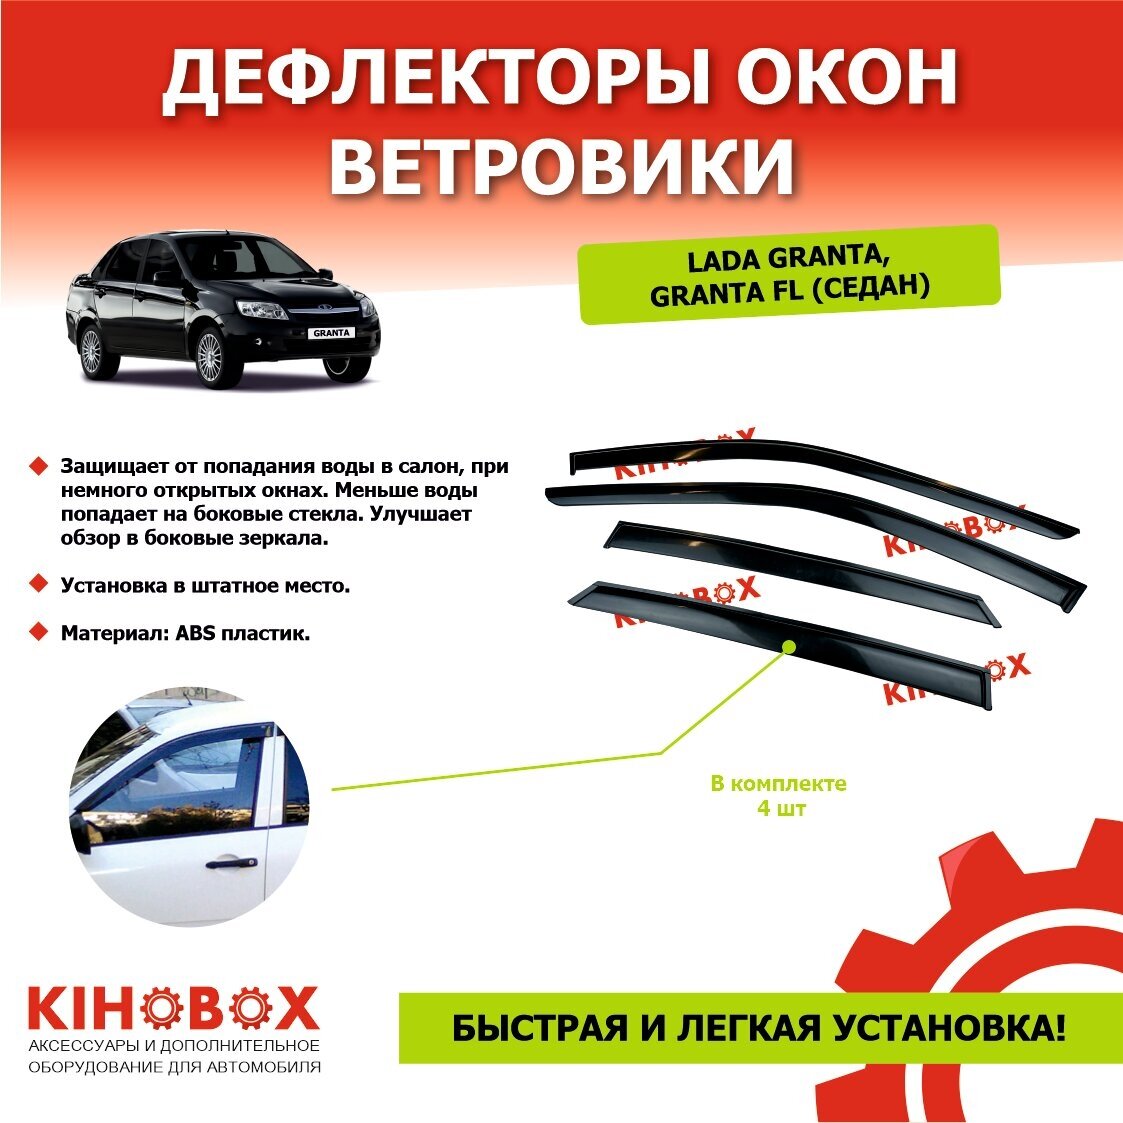 Дефлекторы окон ветровики на Лада Гранта , FL, Калина седан (4 шт) ABS пластик (не просвечивается) KIHOBOX АРТ 5907102